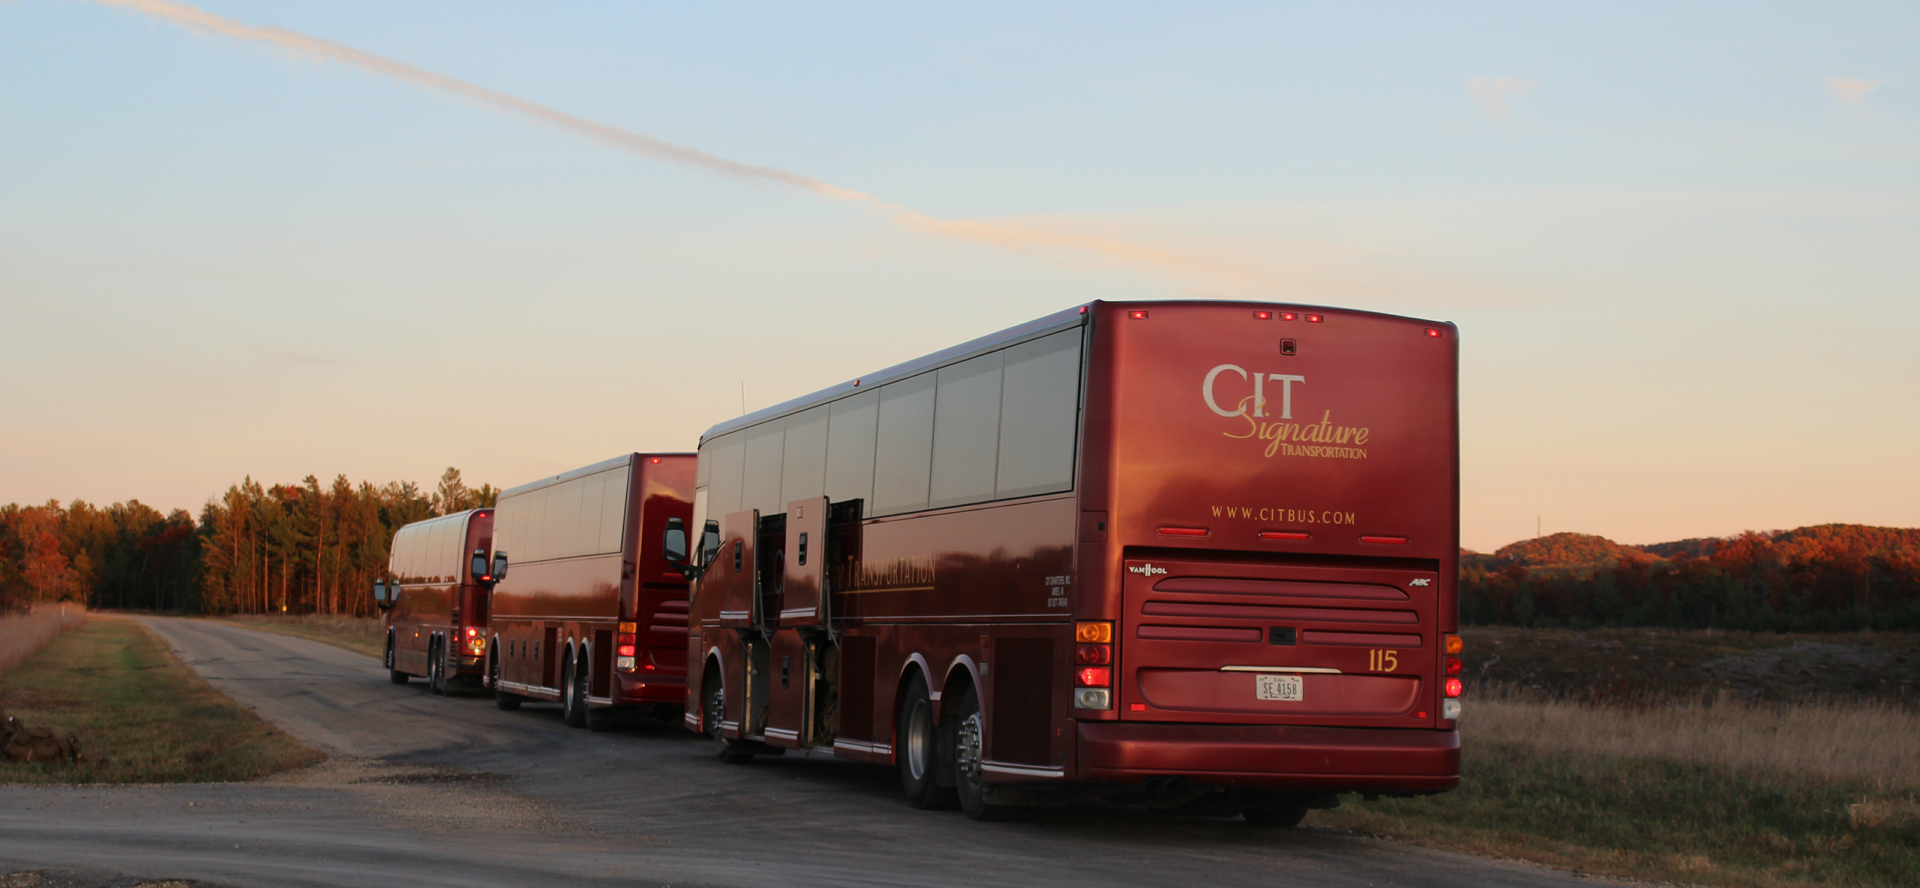 Charter Bus Rental Fleet Driving in Iowa